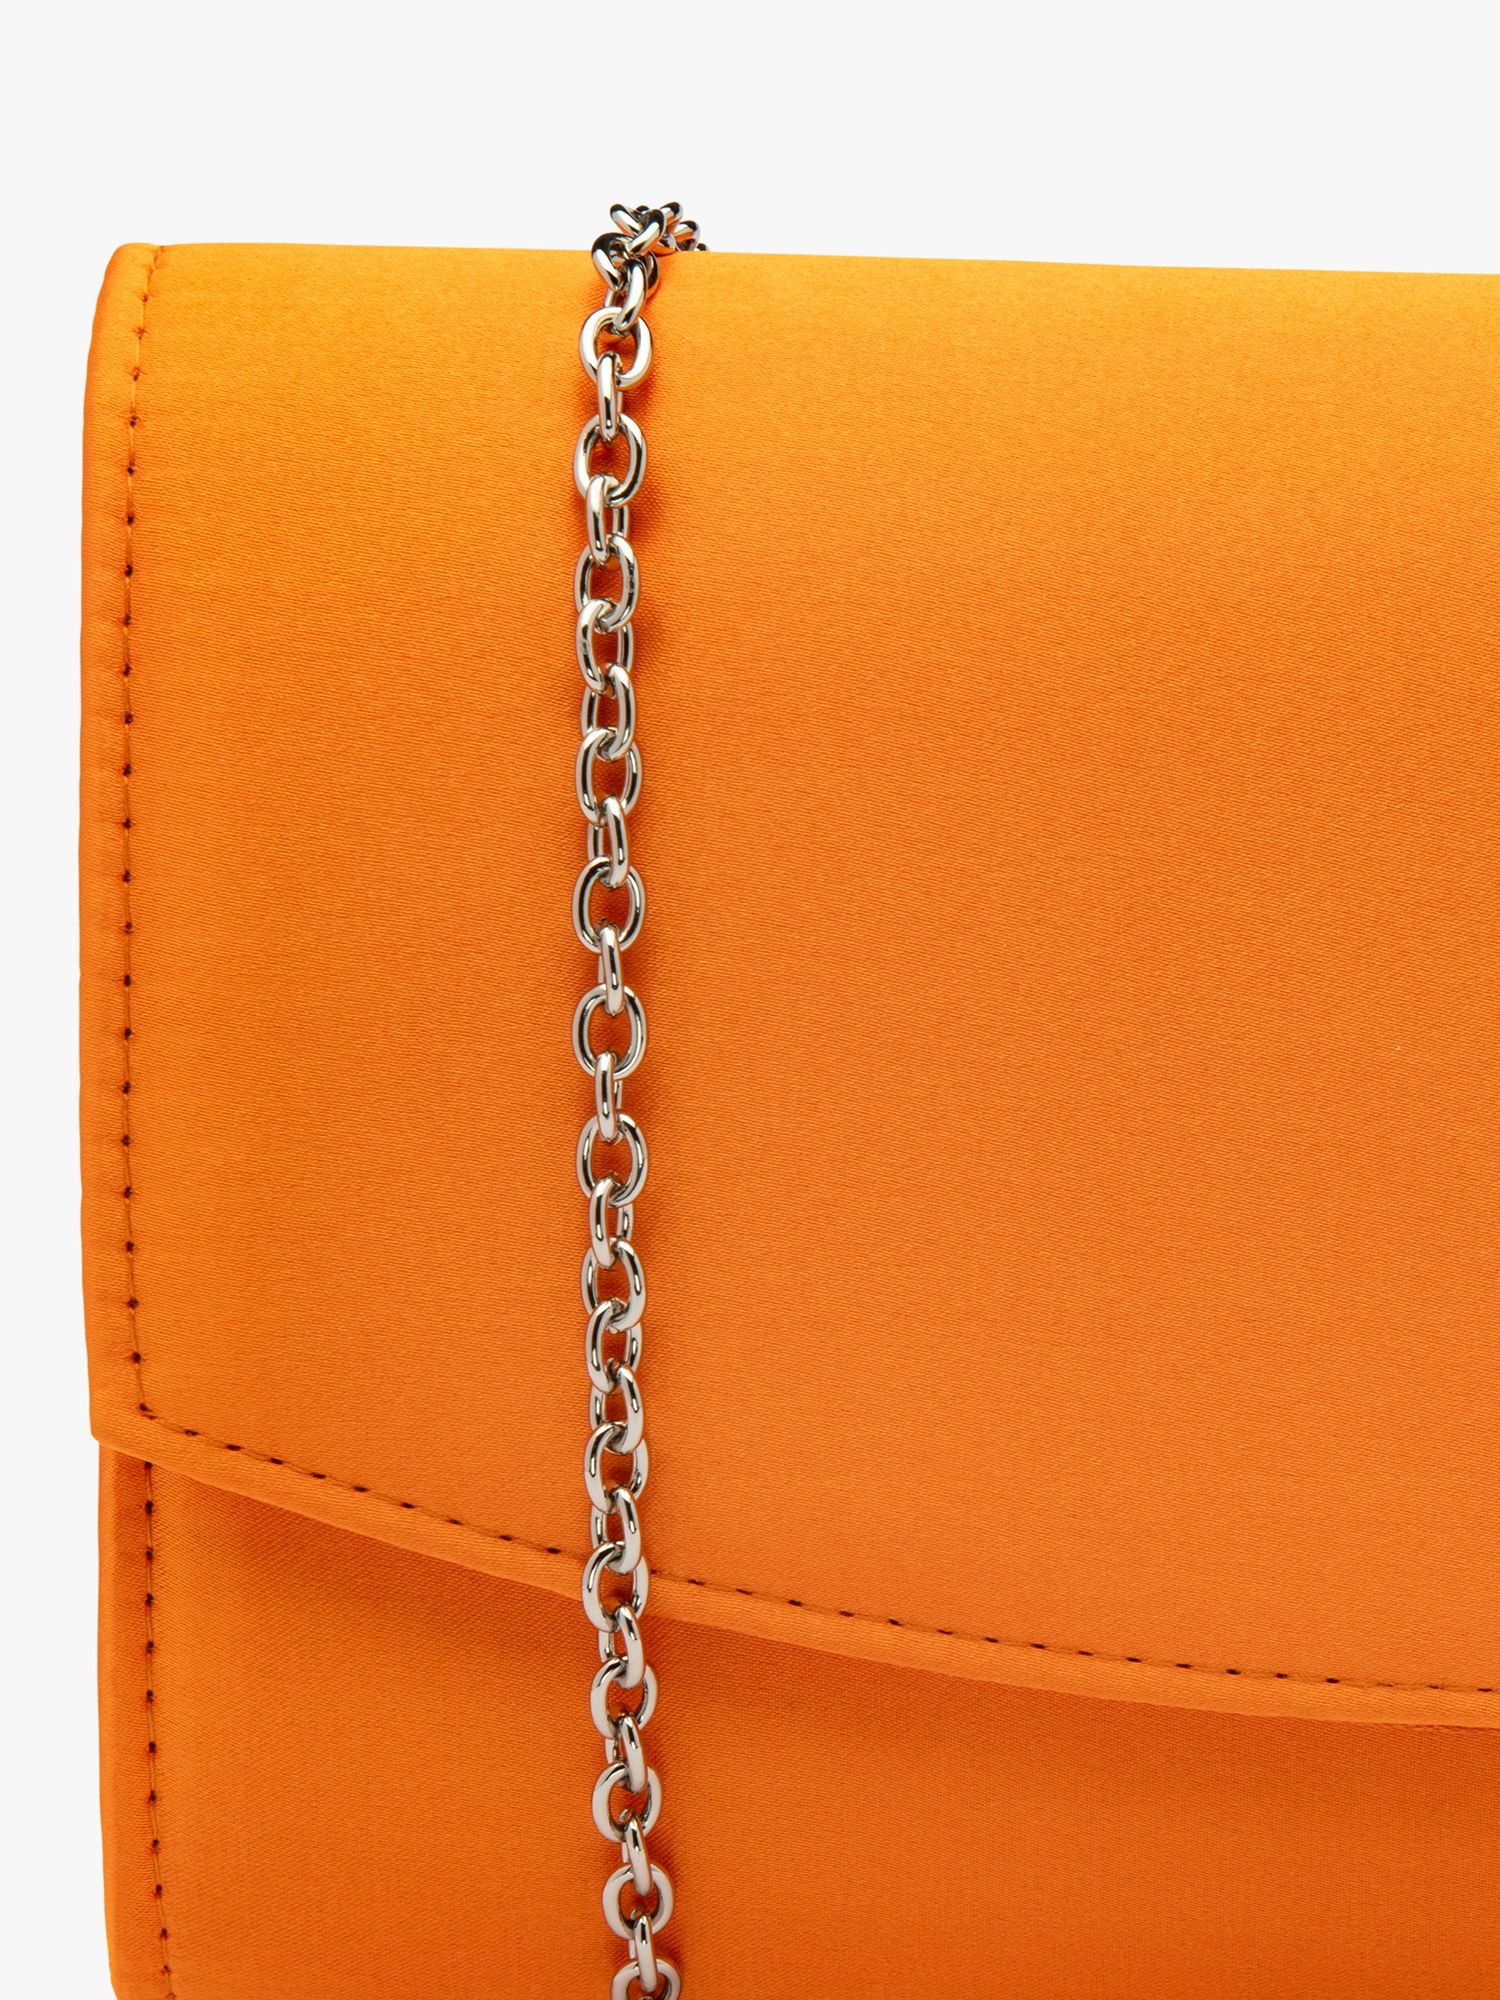 Ravel Ardee Clutch Bag, Orange, One Size